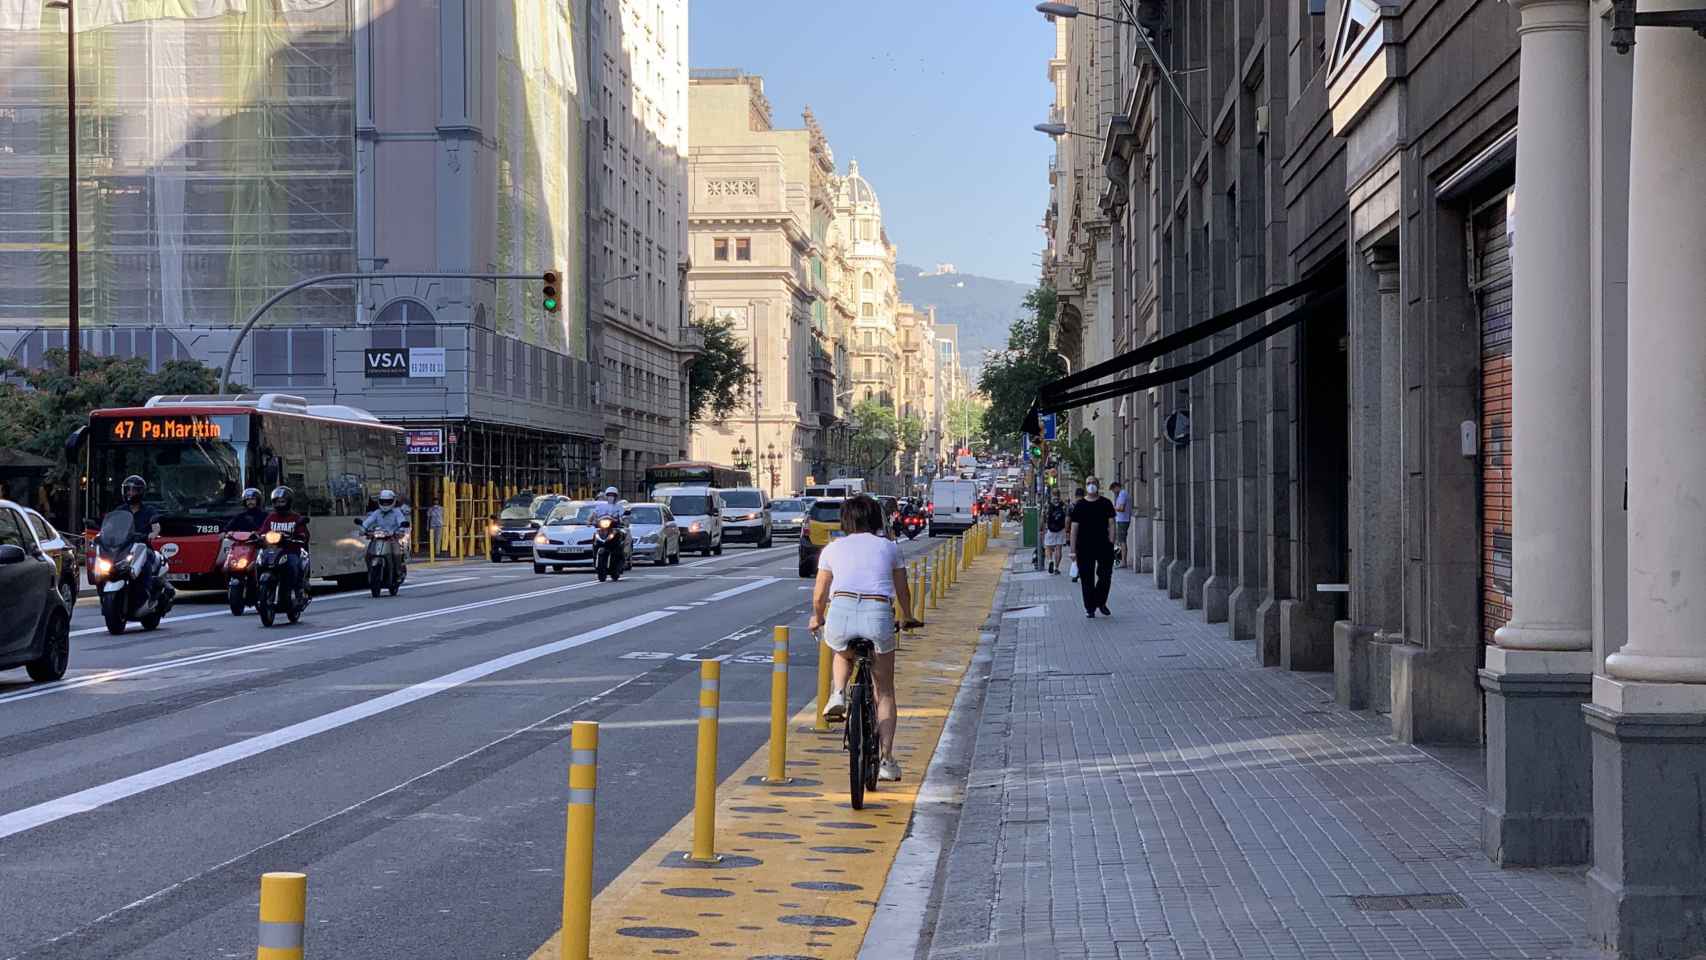 Una ciclista circulando por el carril peatonal de Via Laietana / V.M.